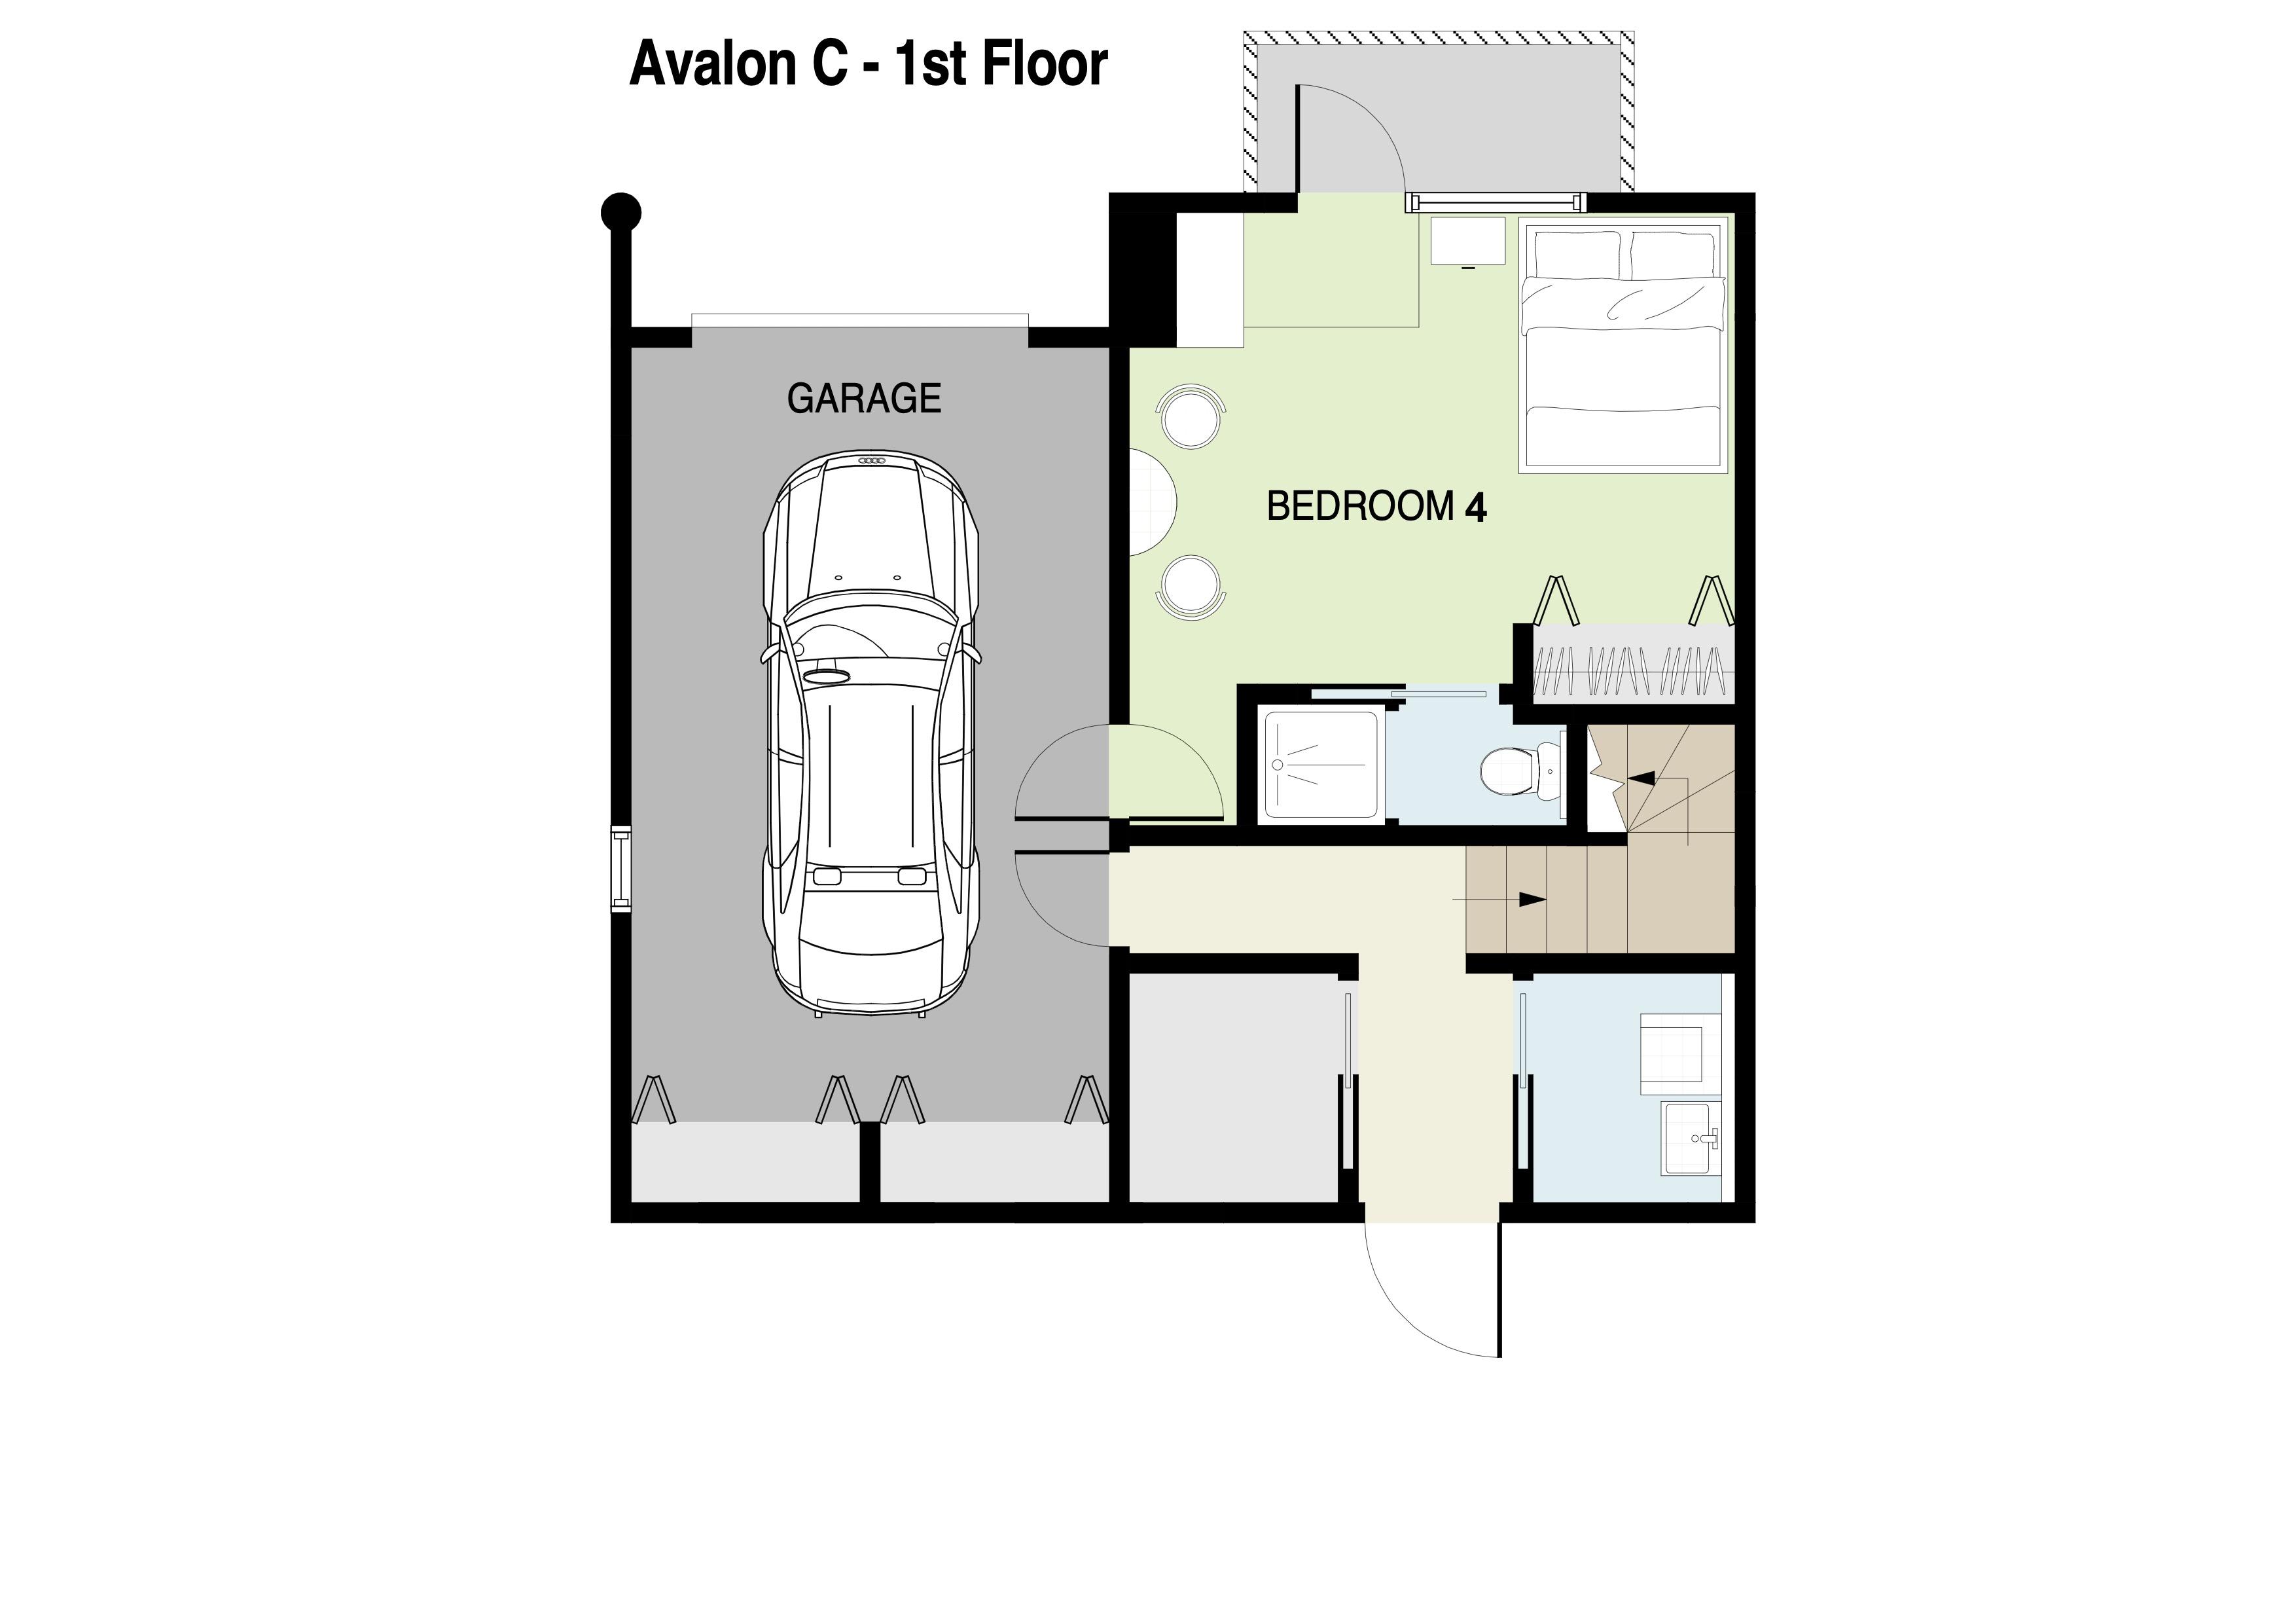 Avalon C 1st floor plans